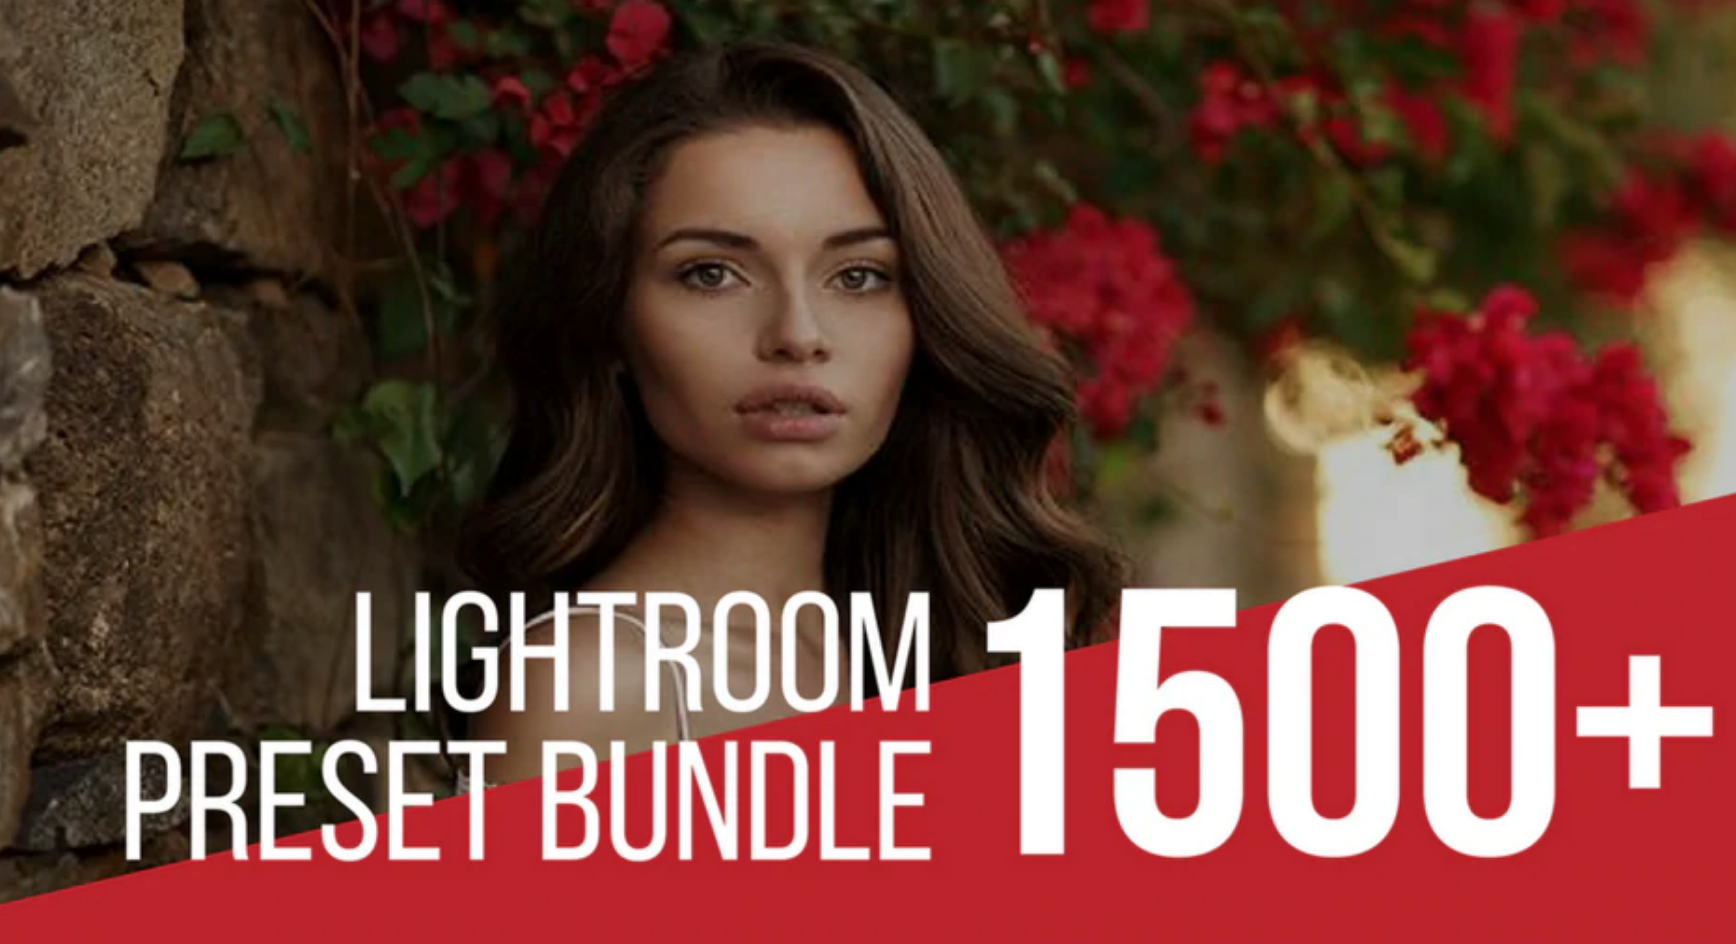 1500 lightroom presets for photographers